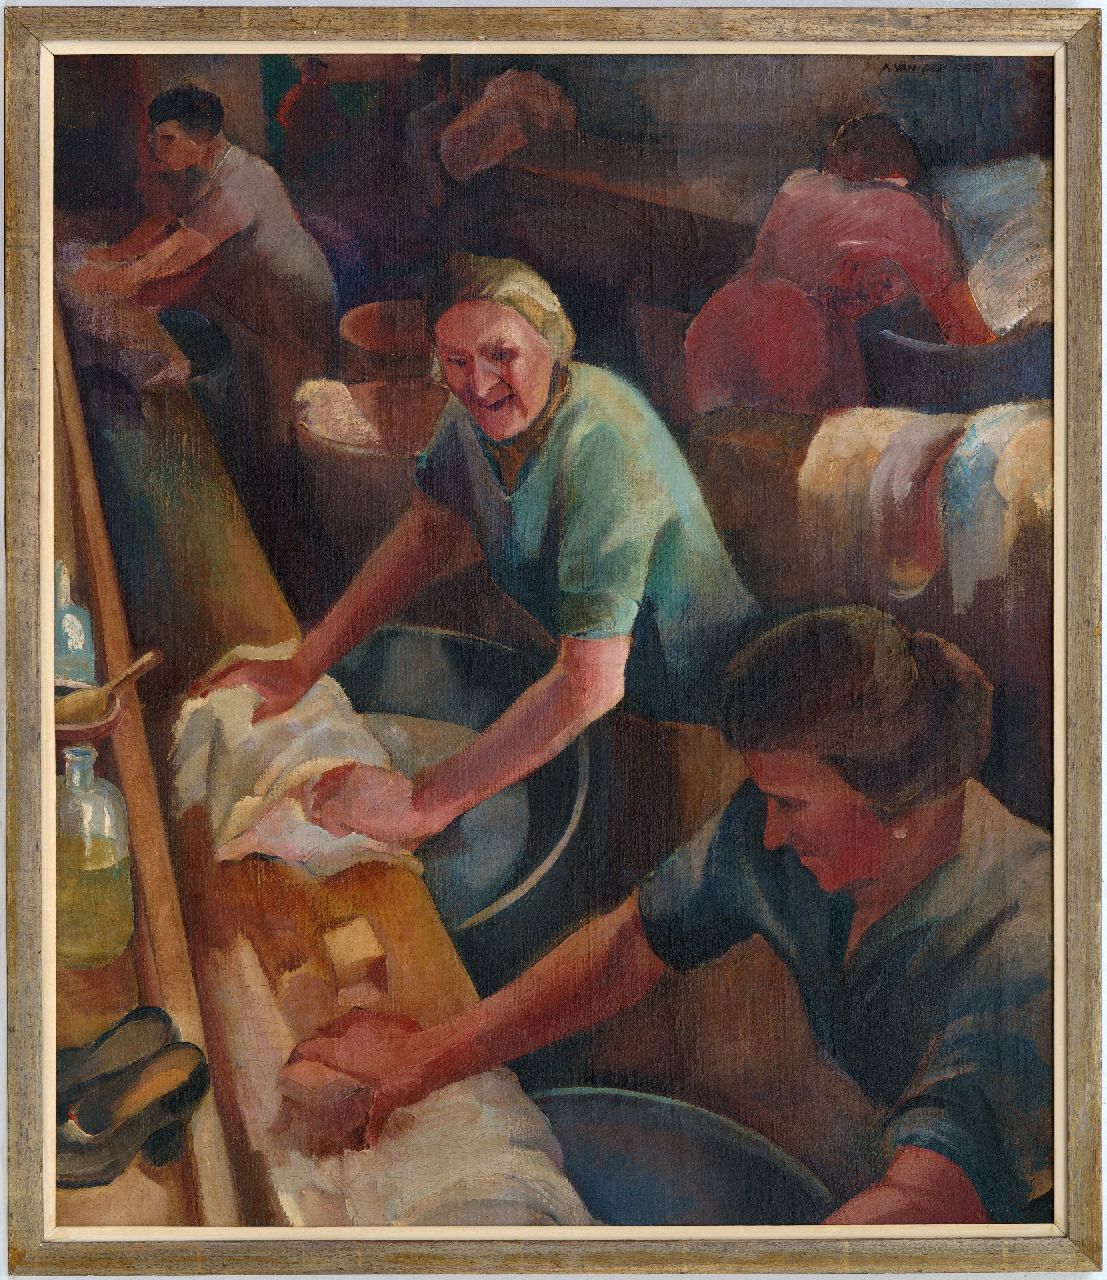 Feer A. van der | Anna 'Anneke' van der Feer, Laundresses, oil on canvas 70.3 x 60.1 cm, signed u.r.